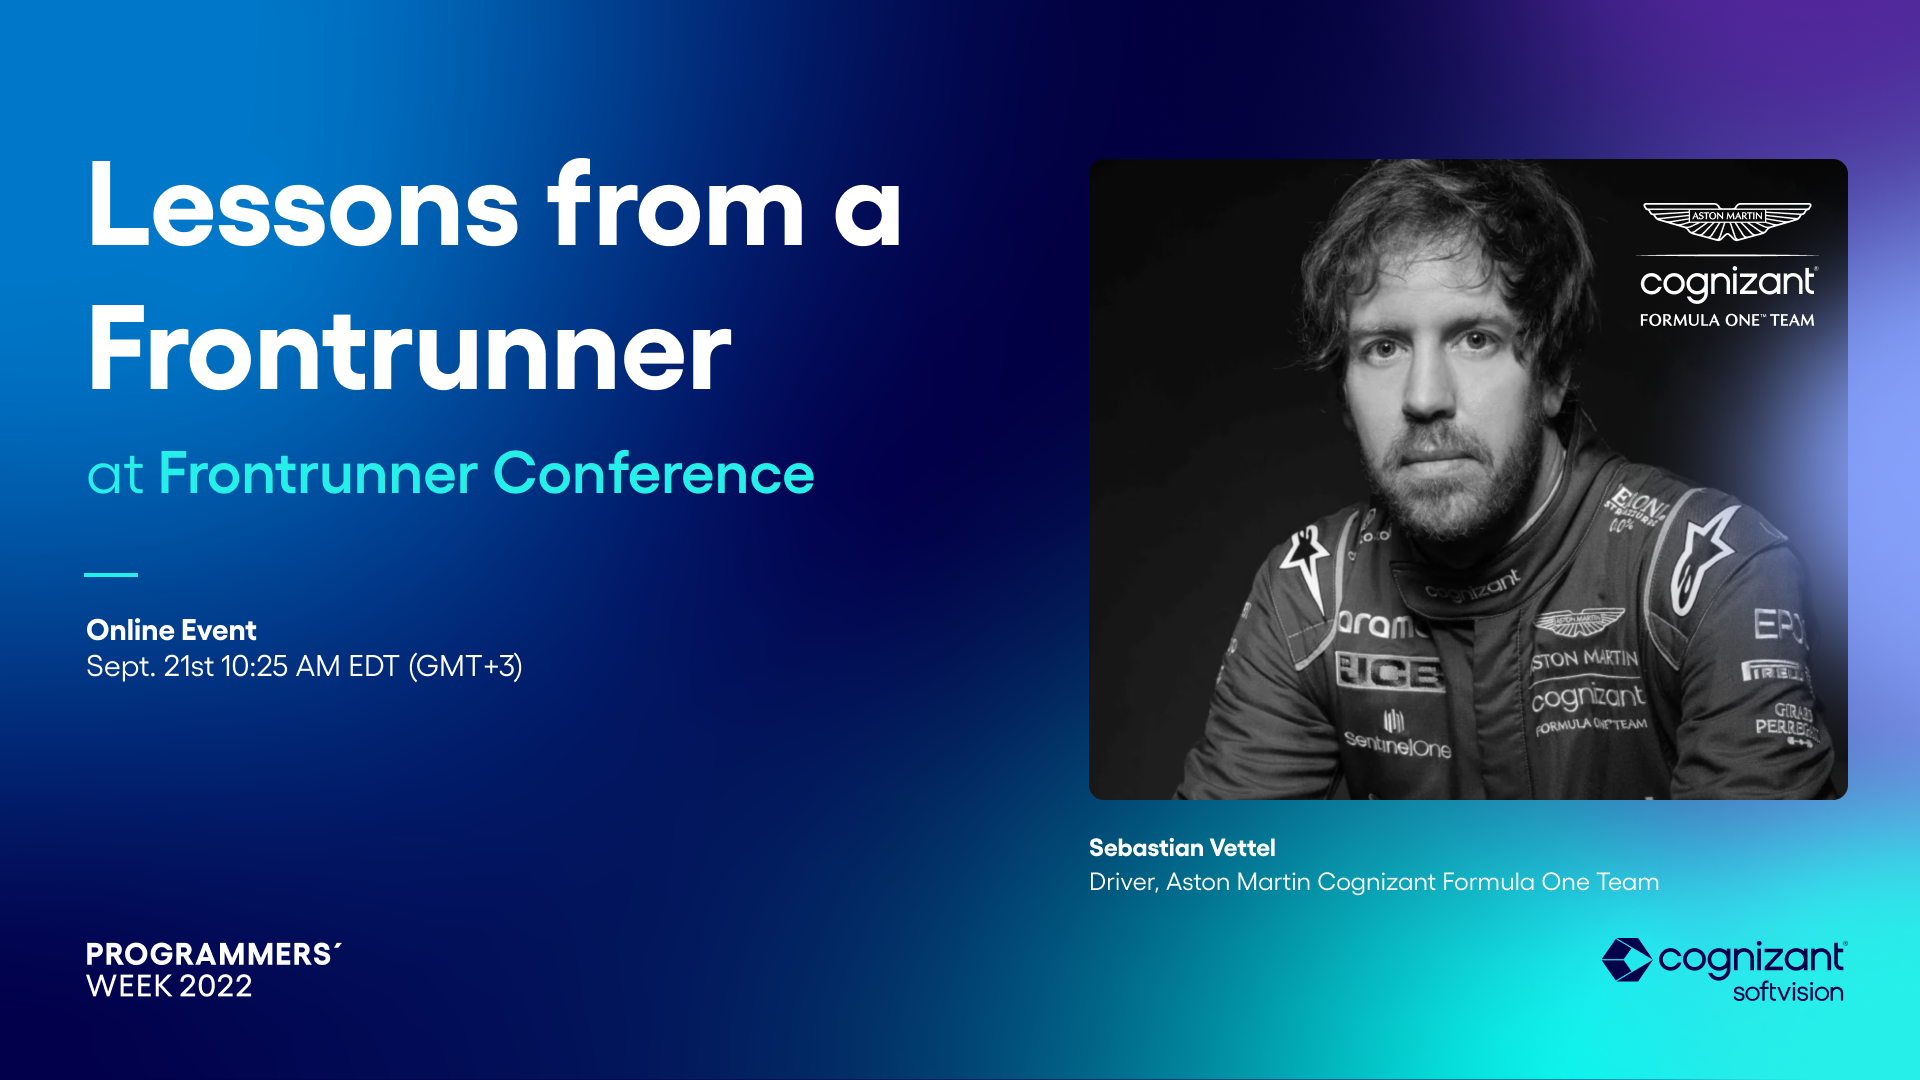 Pilotul F1 Sebastian Vettel, printre speakerii Programmers’ Week 2022